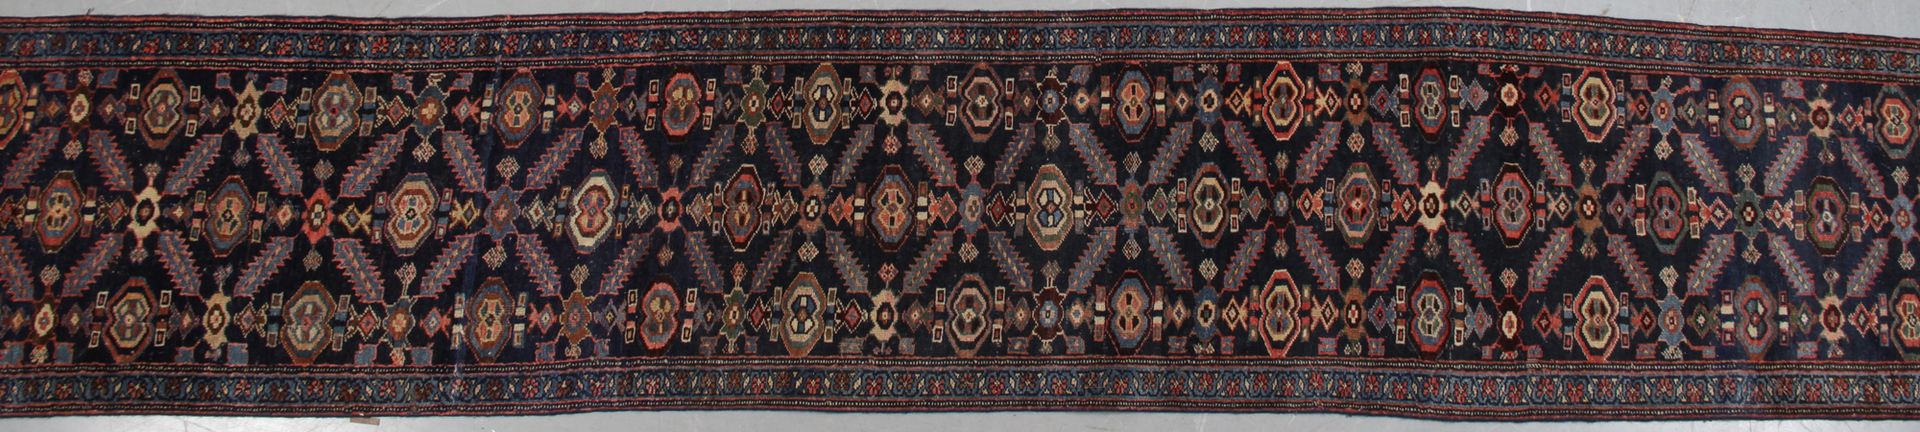 Null 古代比贾尔画廊地毯（伊朗西北部）约1890年。 

有14个由石榴状的灰色珍珠叶子组成的奖章，上面镶嵌着几何风格的菱形花蕾。 

四个砖砌的窗台，有花&hellip;